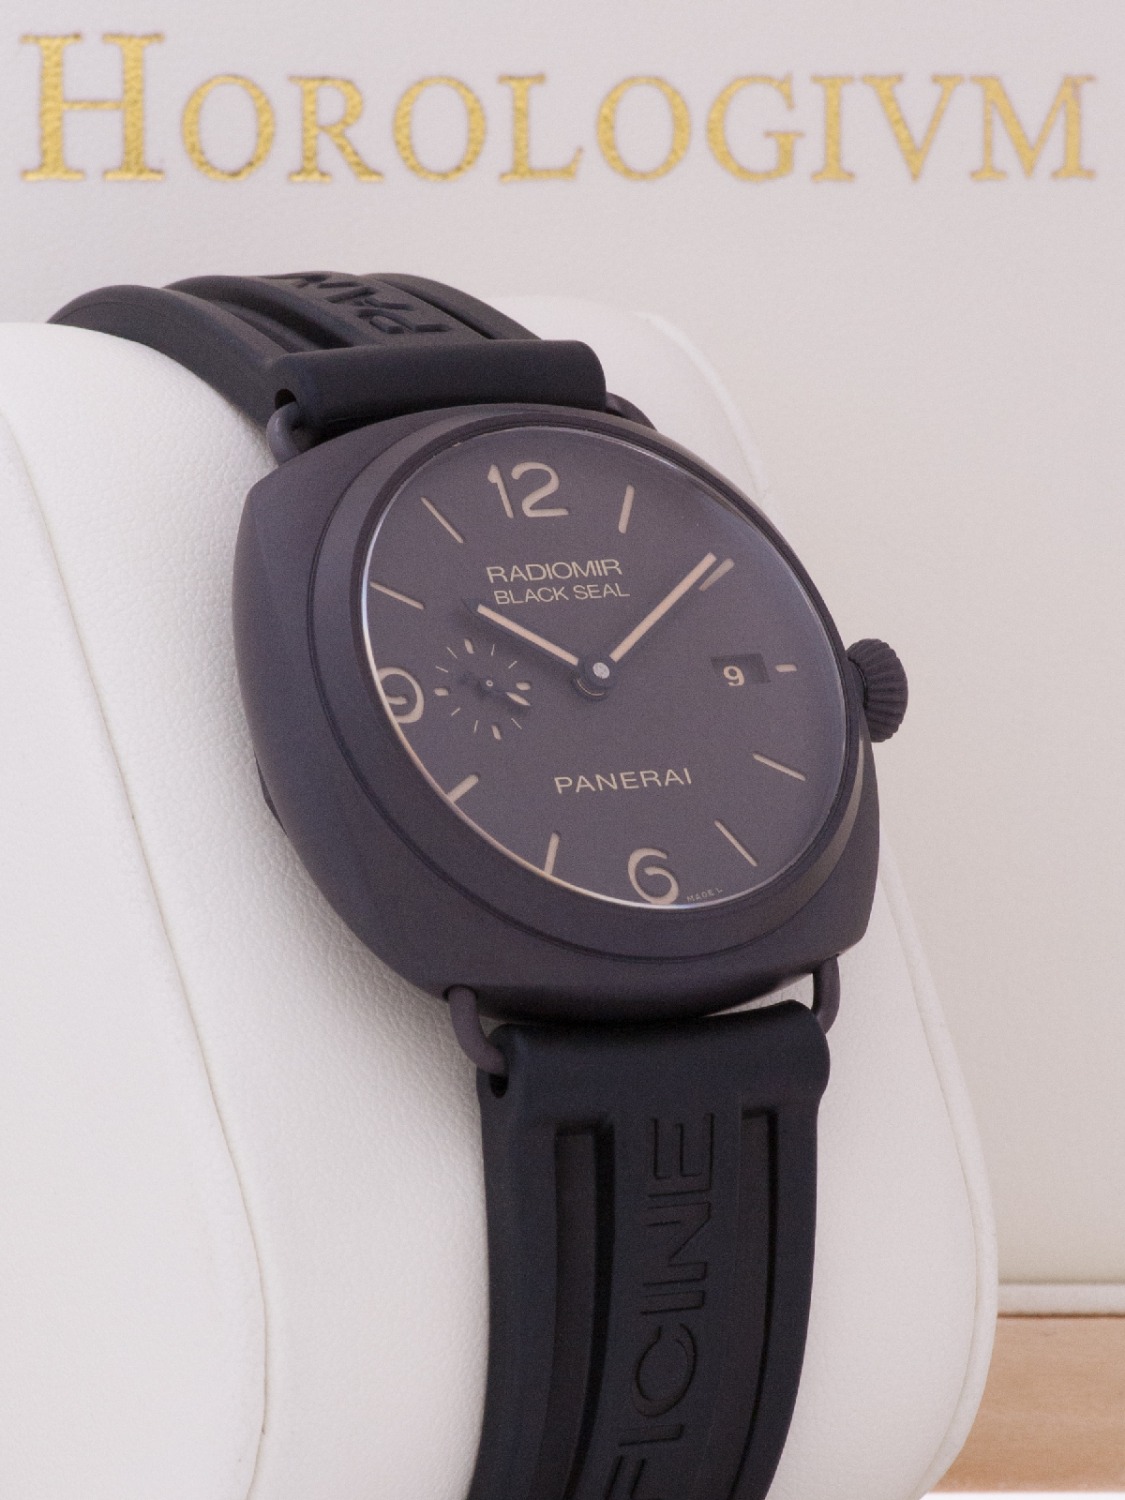 Panerai Radiomir Black Seal PAM00505 watch, black